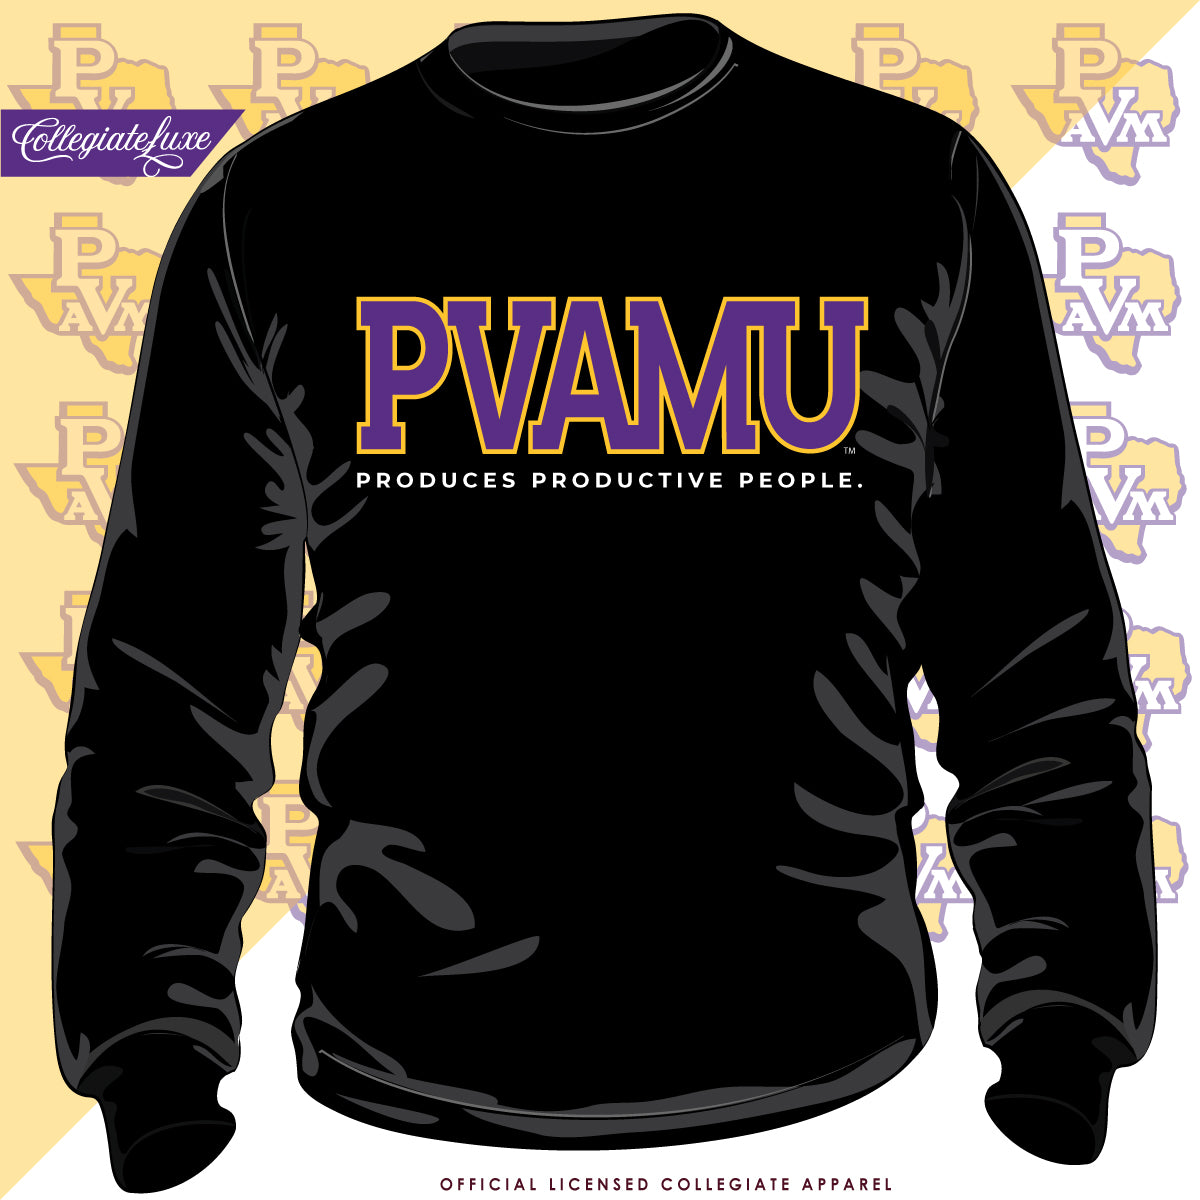 Prairie View A&M | 1900 Univ. BLACK Unisex Sweatshirt (N)